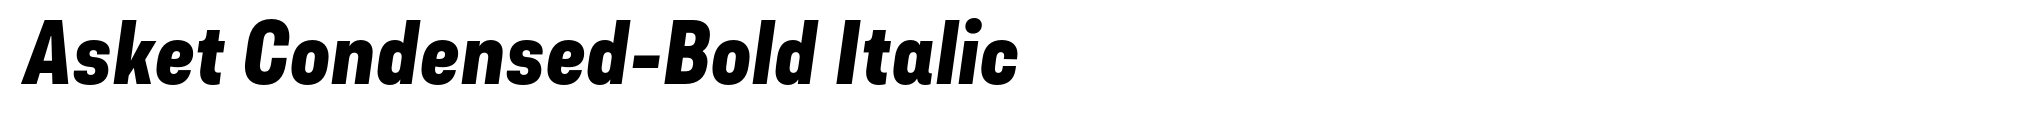 Asket Condensed-Bold Italic image